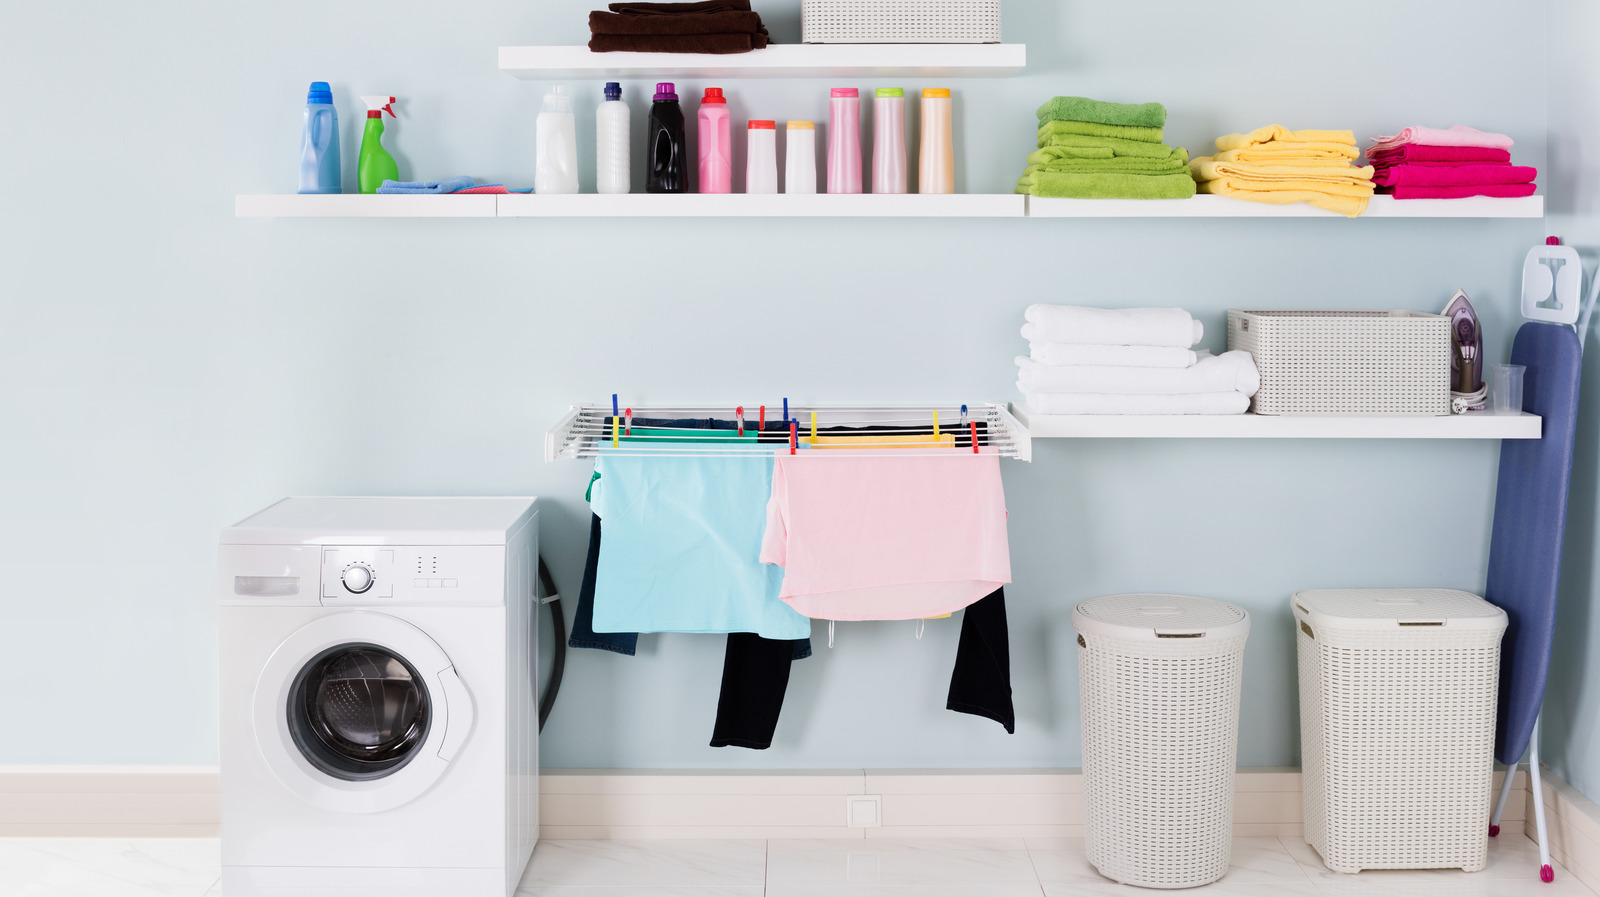 DIY Laundry Room Shelving & Storage Ideas - Fantabulosity